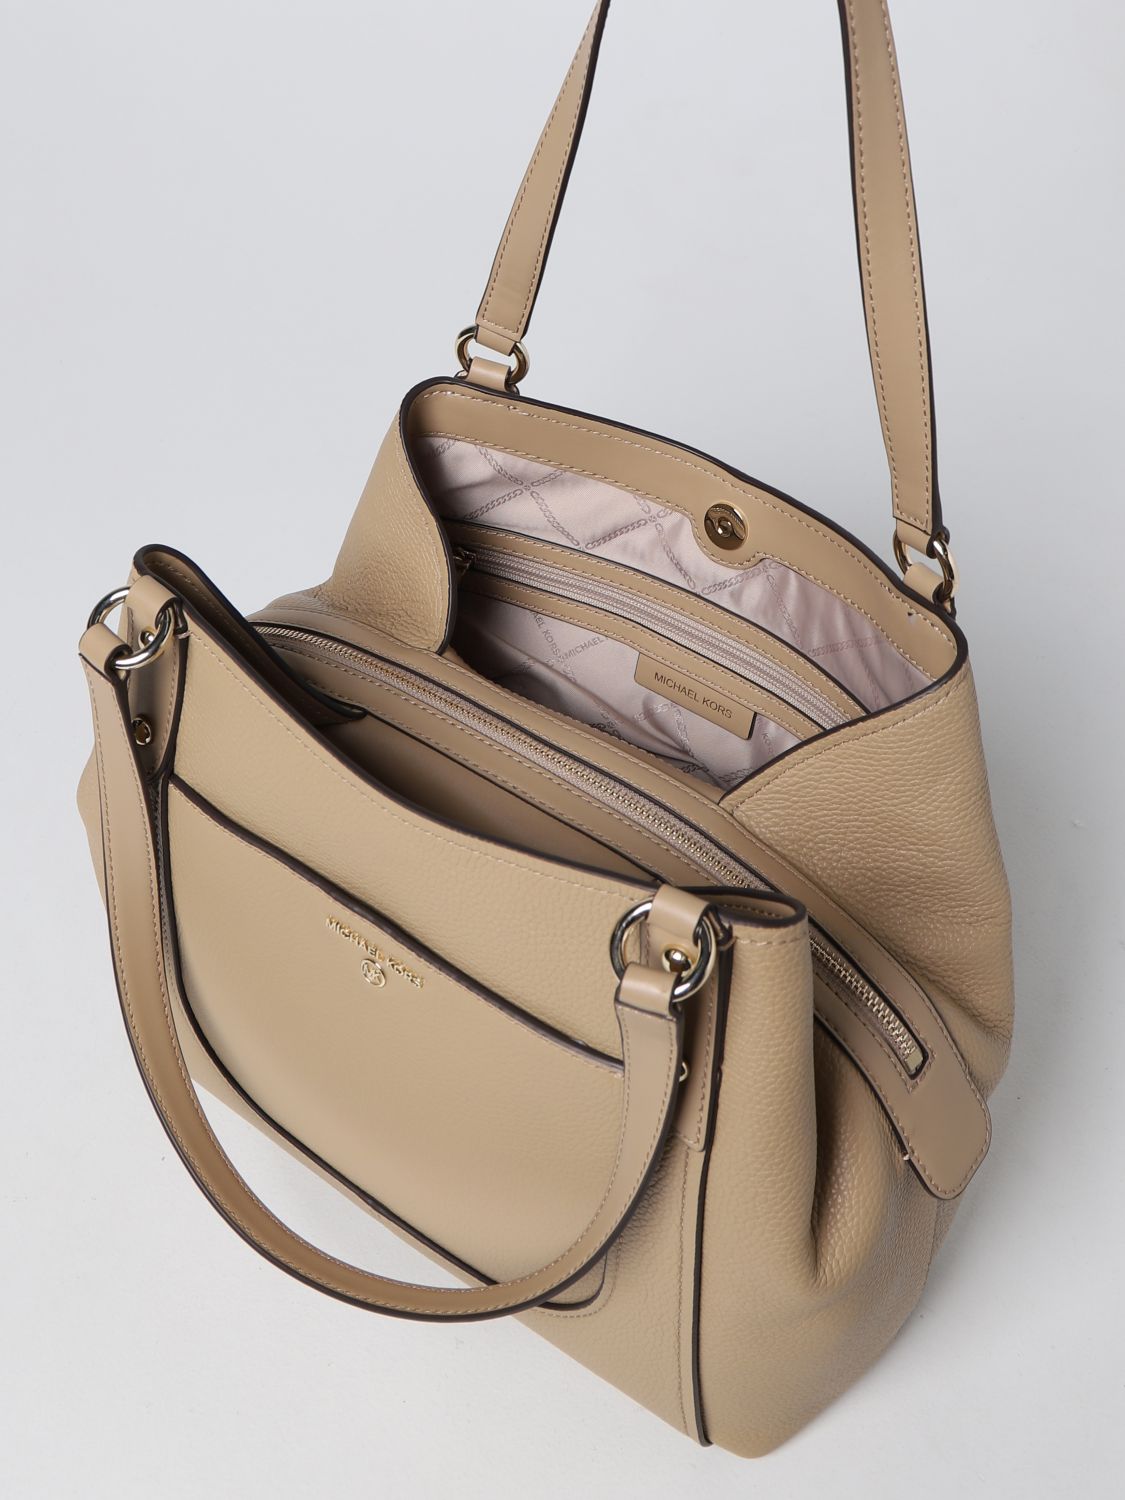 Michael Kors Shoulder Bag Beige Oyster Handbags Amazoncom